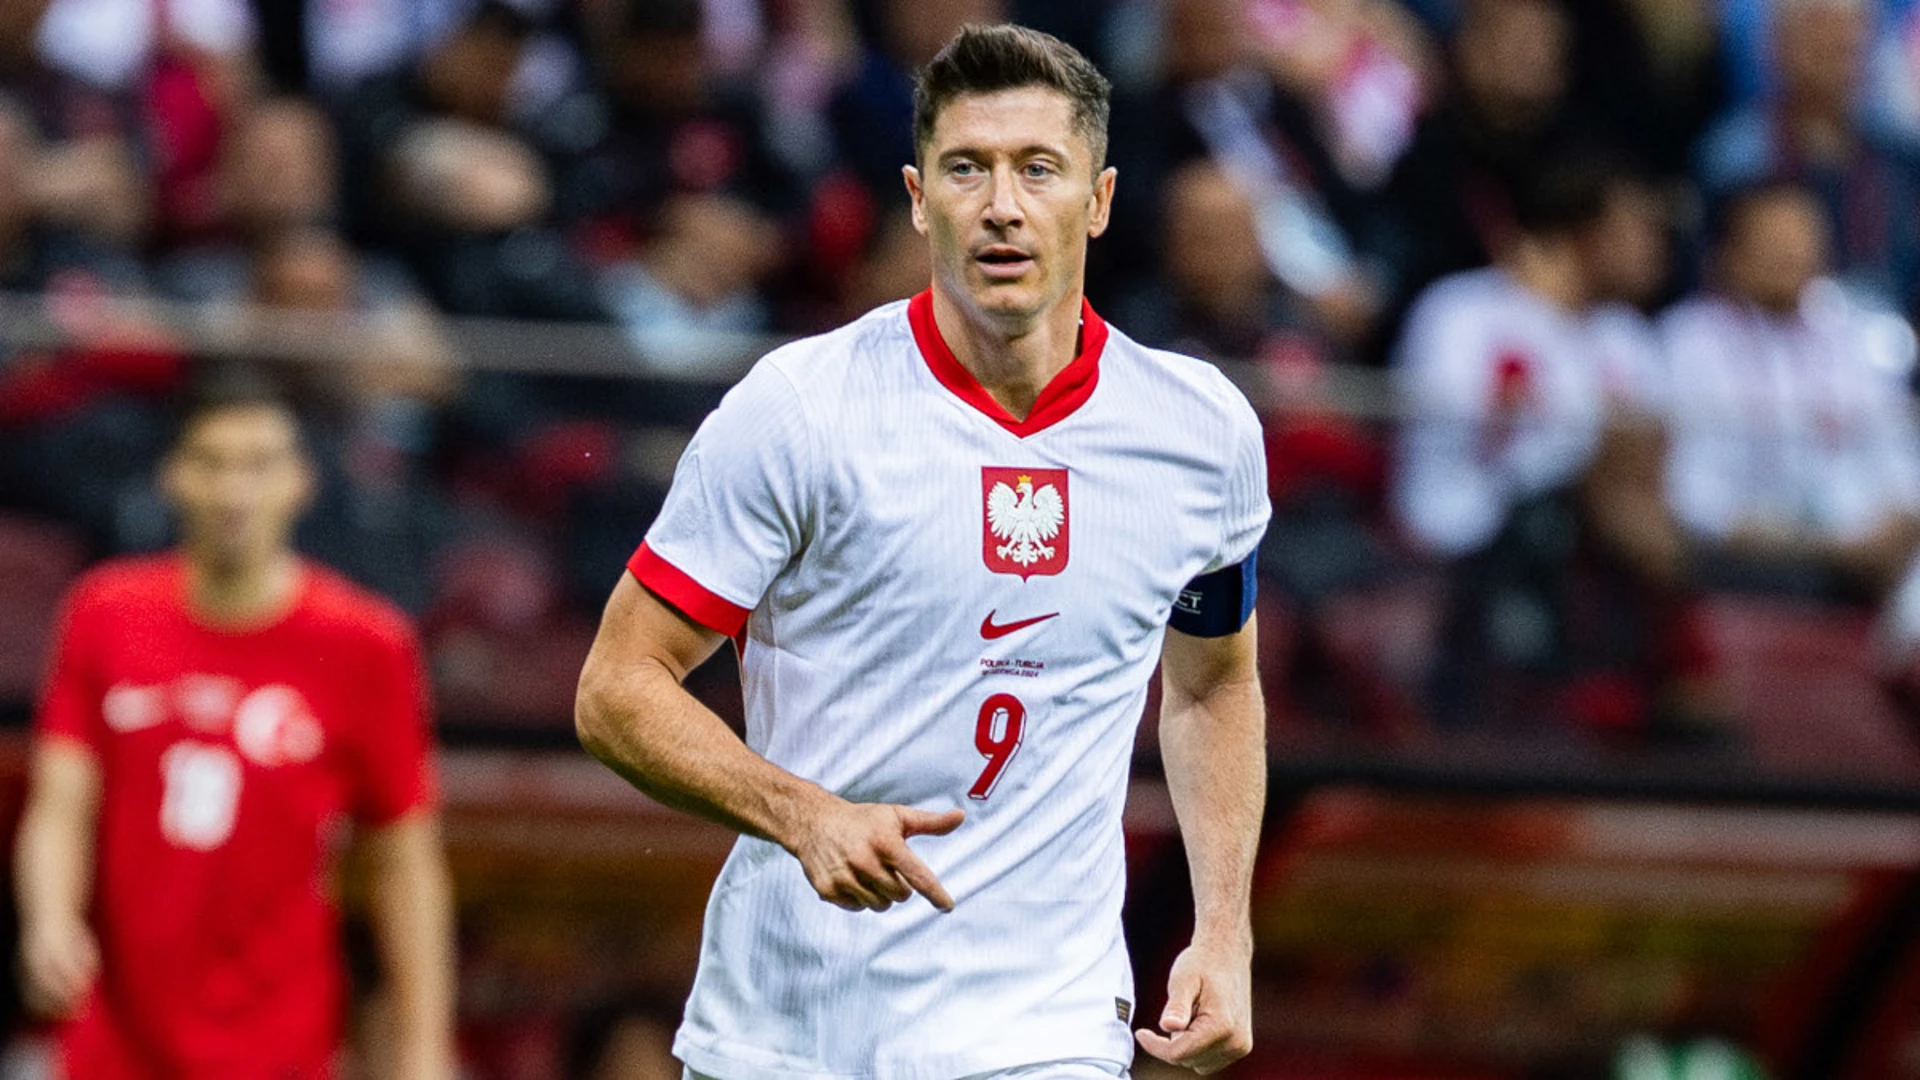 Lewandowski not yet ready to retire from Poland team